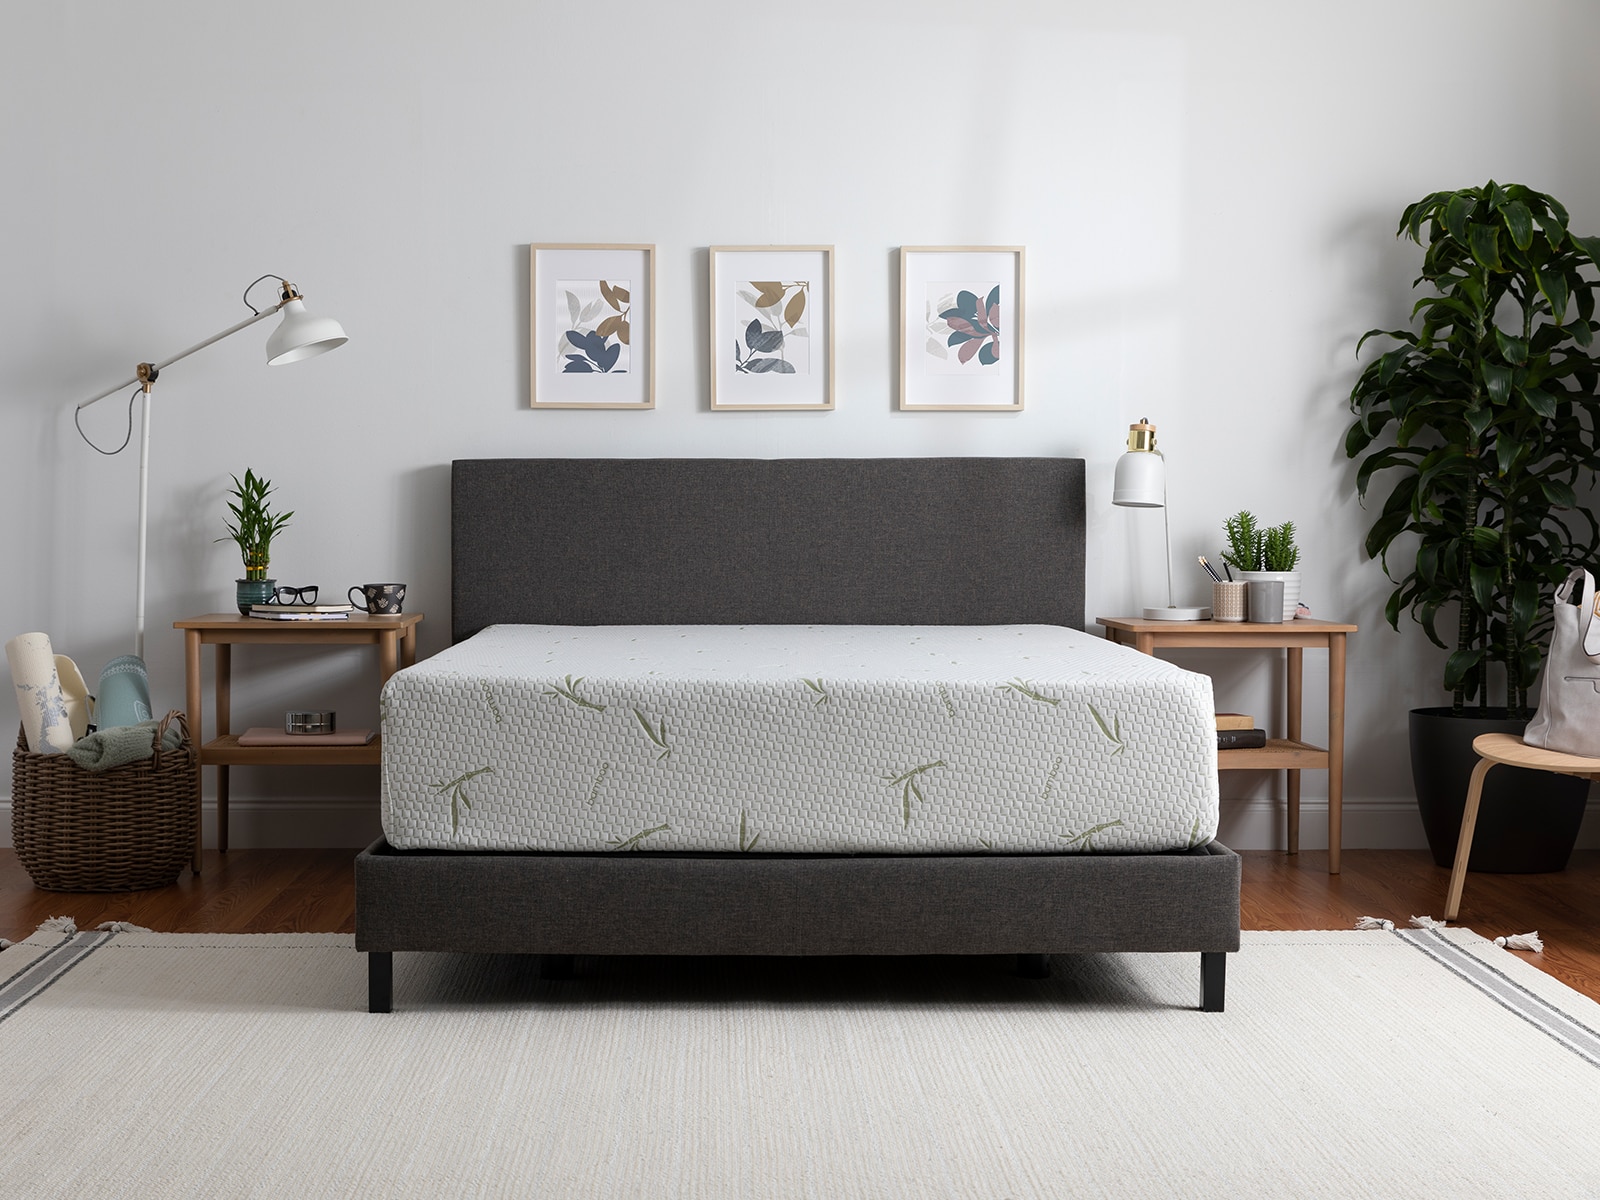 venitian plush mattress with bamboo top